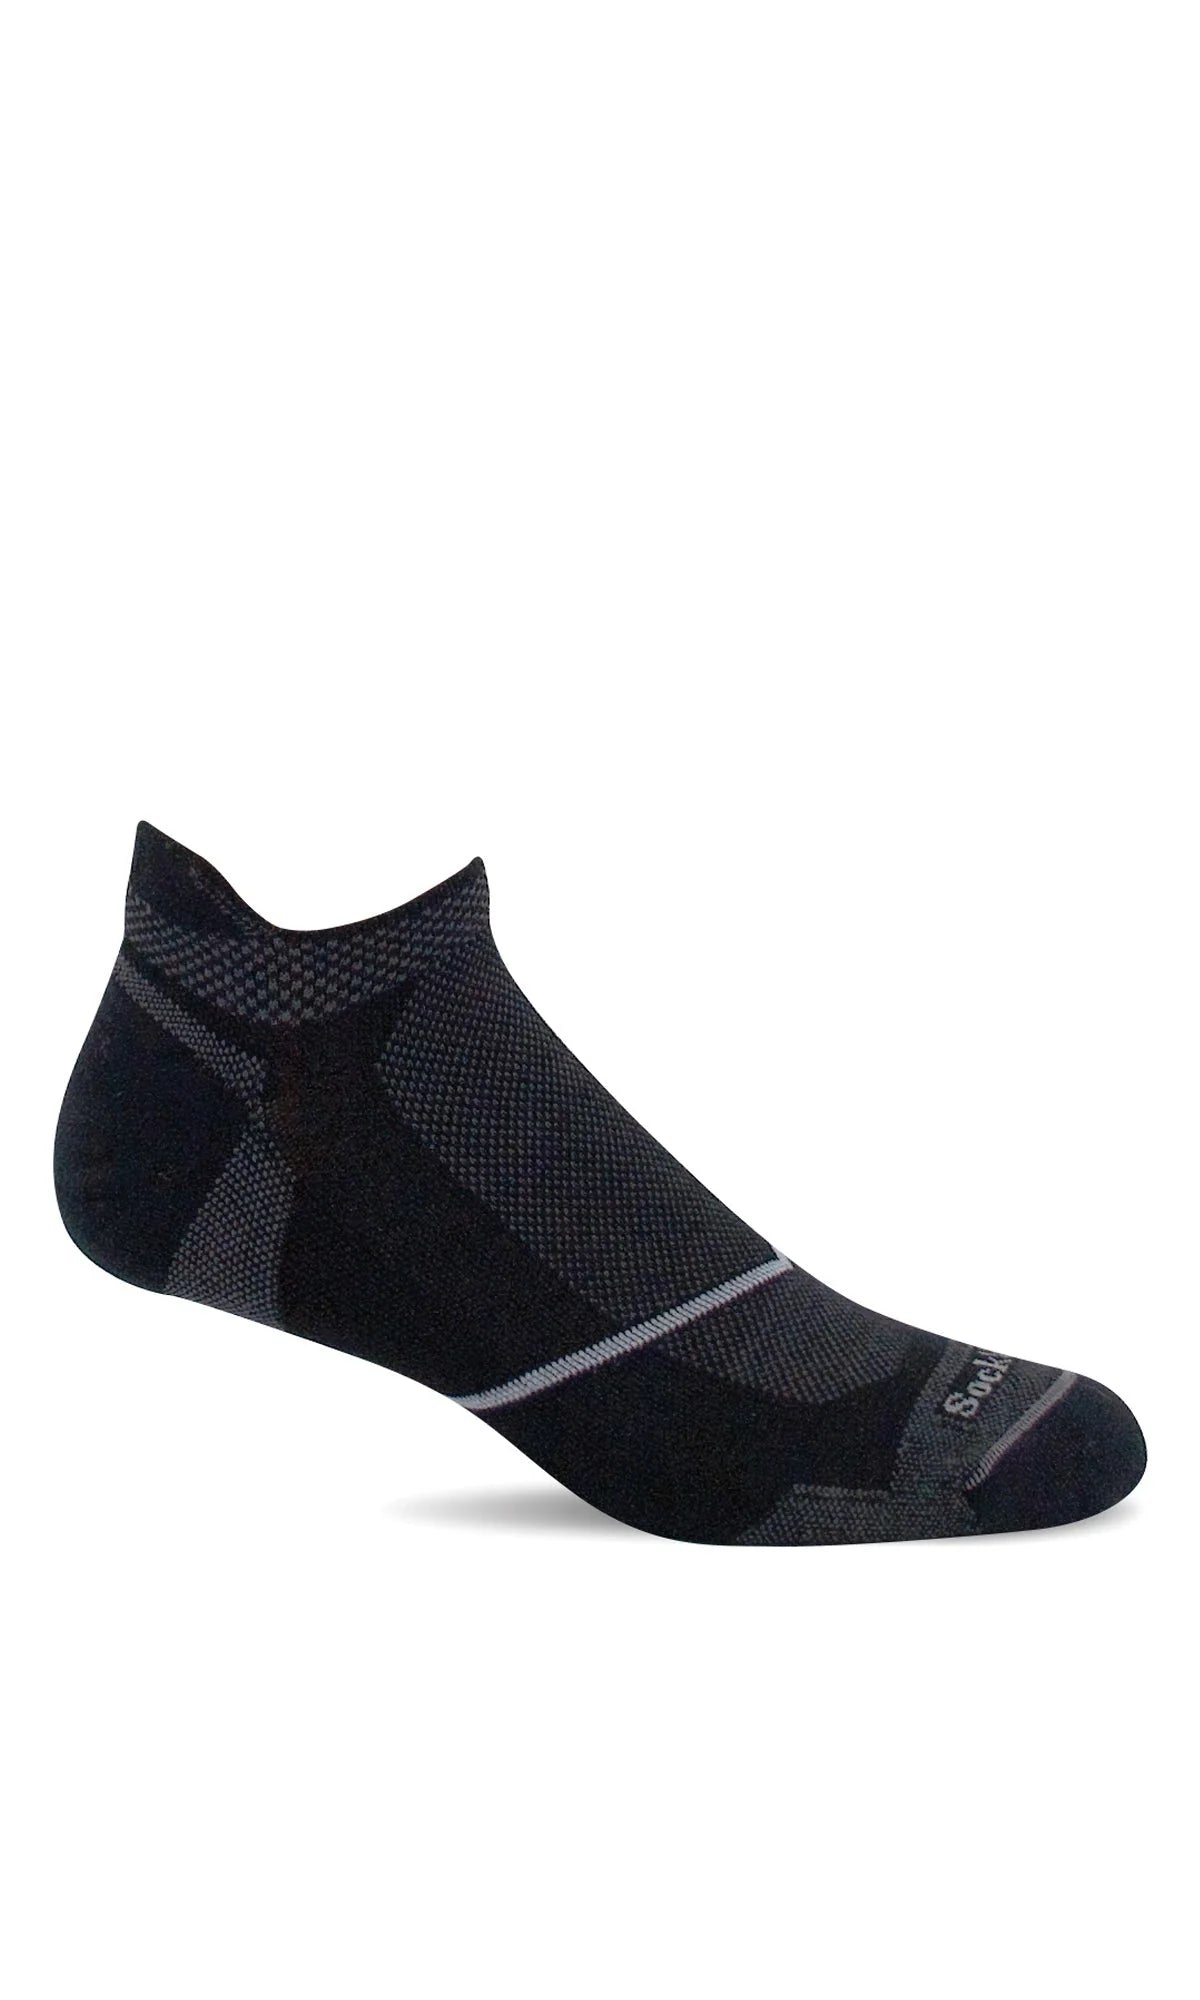 Pulse Micro Men's Bamboo/Merino Firm Compression Ankle Socks in Black - The Sockery